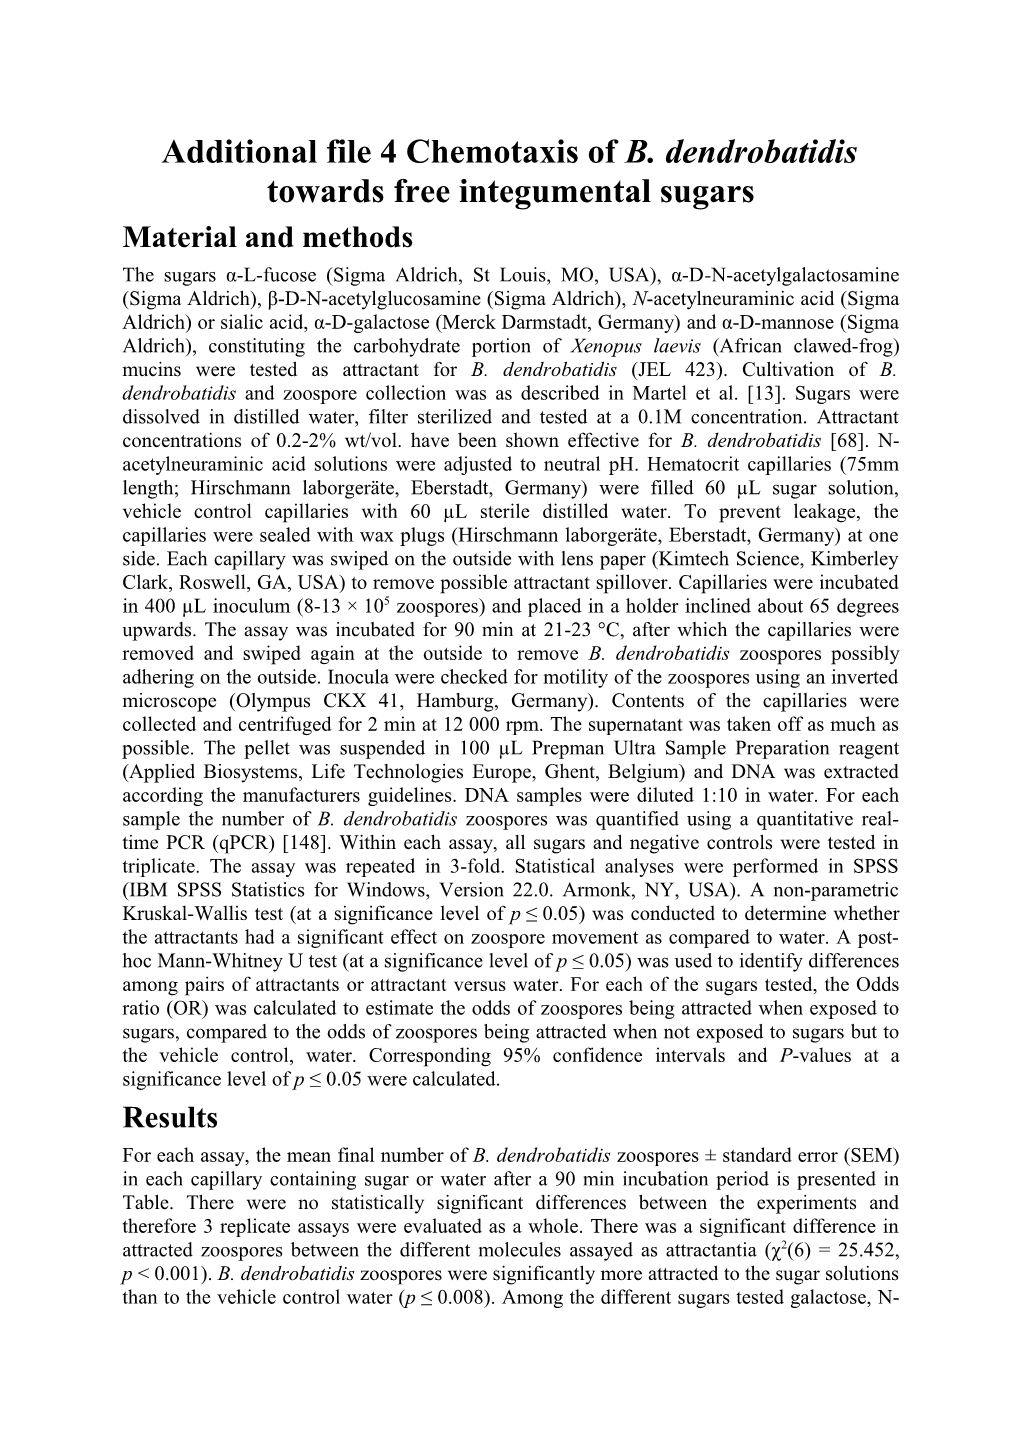 Additional File 4 Chemotaxis of B. Dendrobatidis Towards Free Integumental Sugars